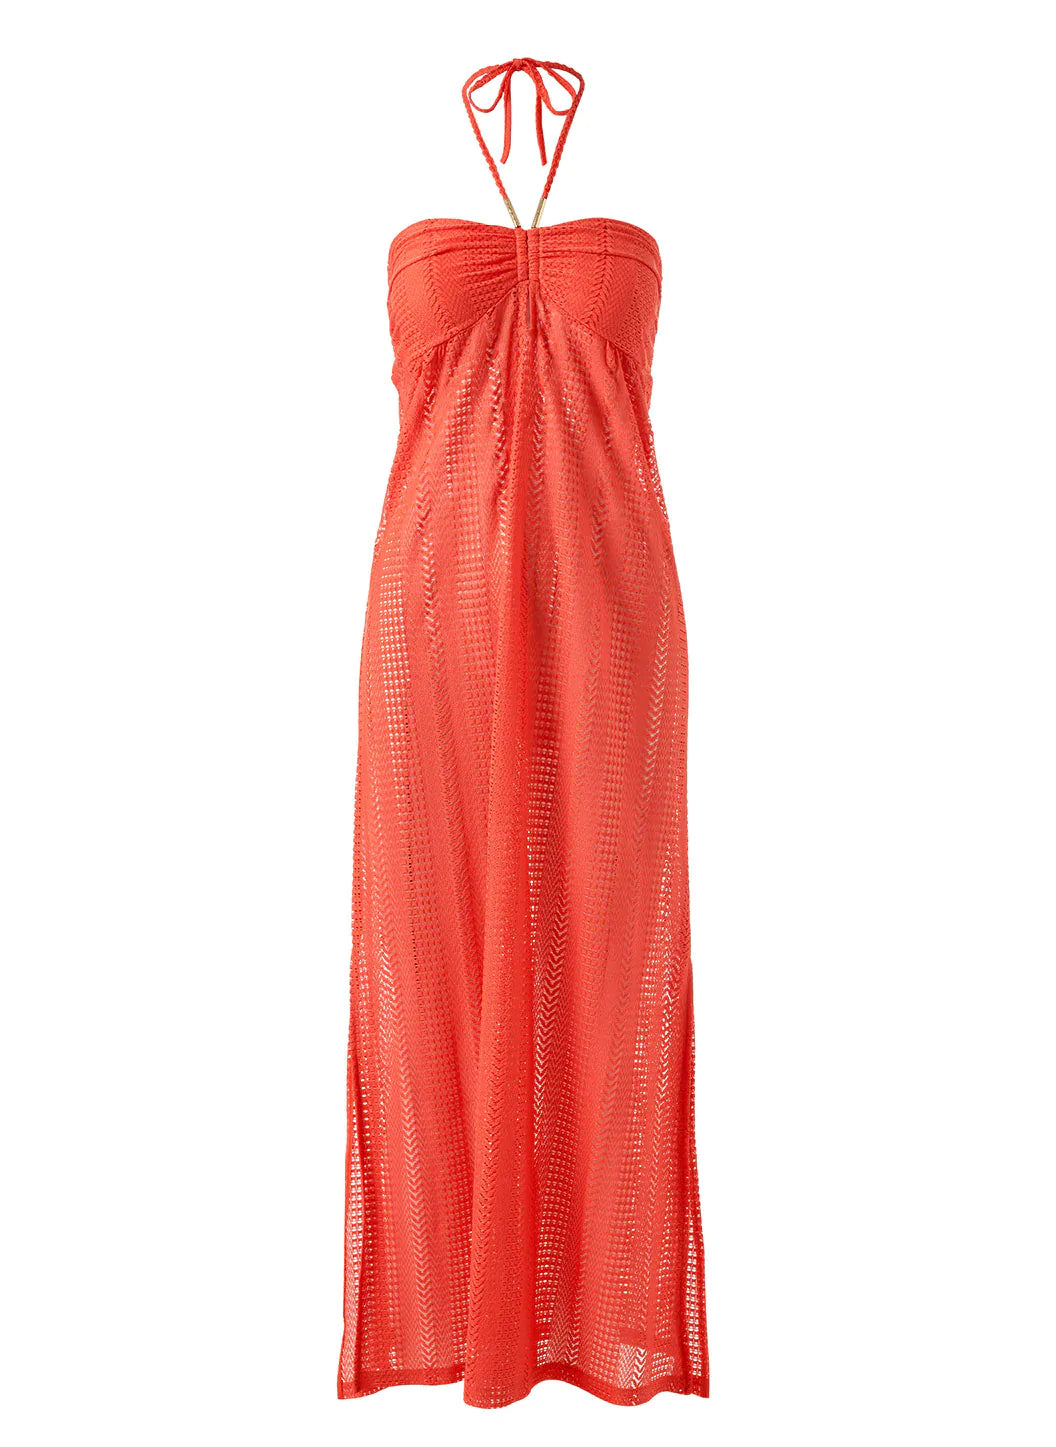 Mila Apricot Dress Cutout 2023   